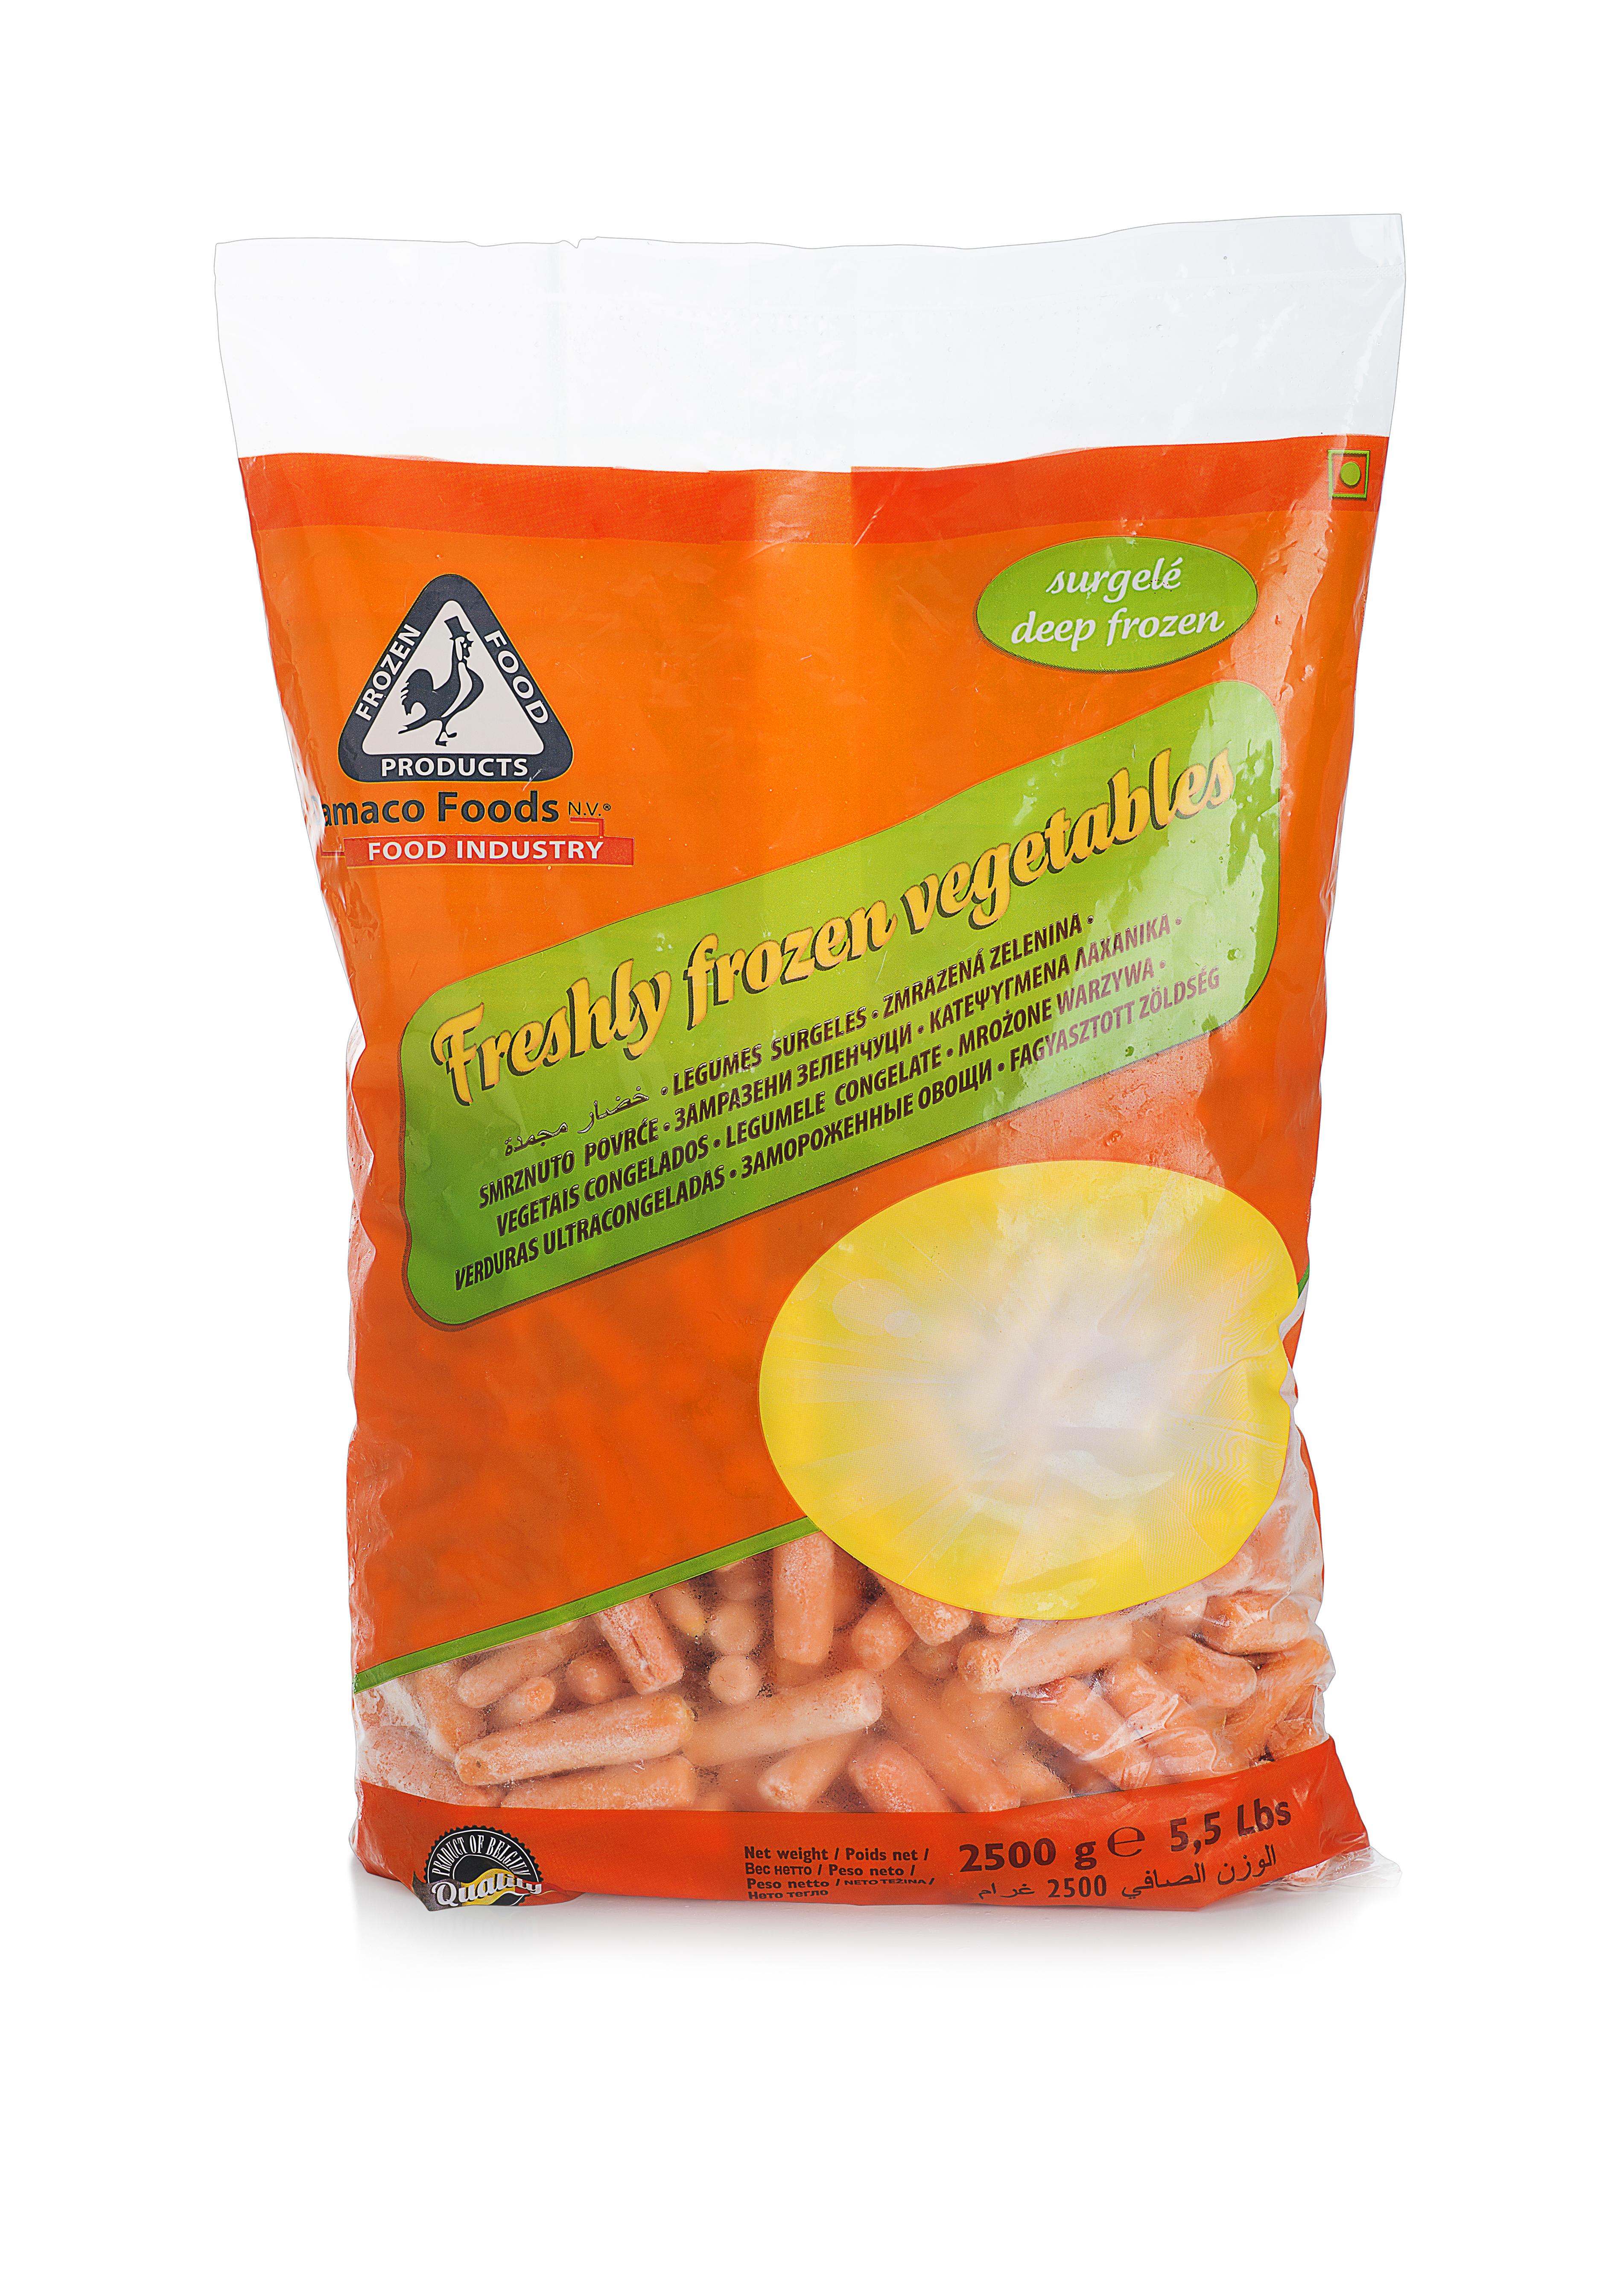 baby carrot damaco brand packaging